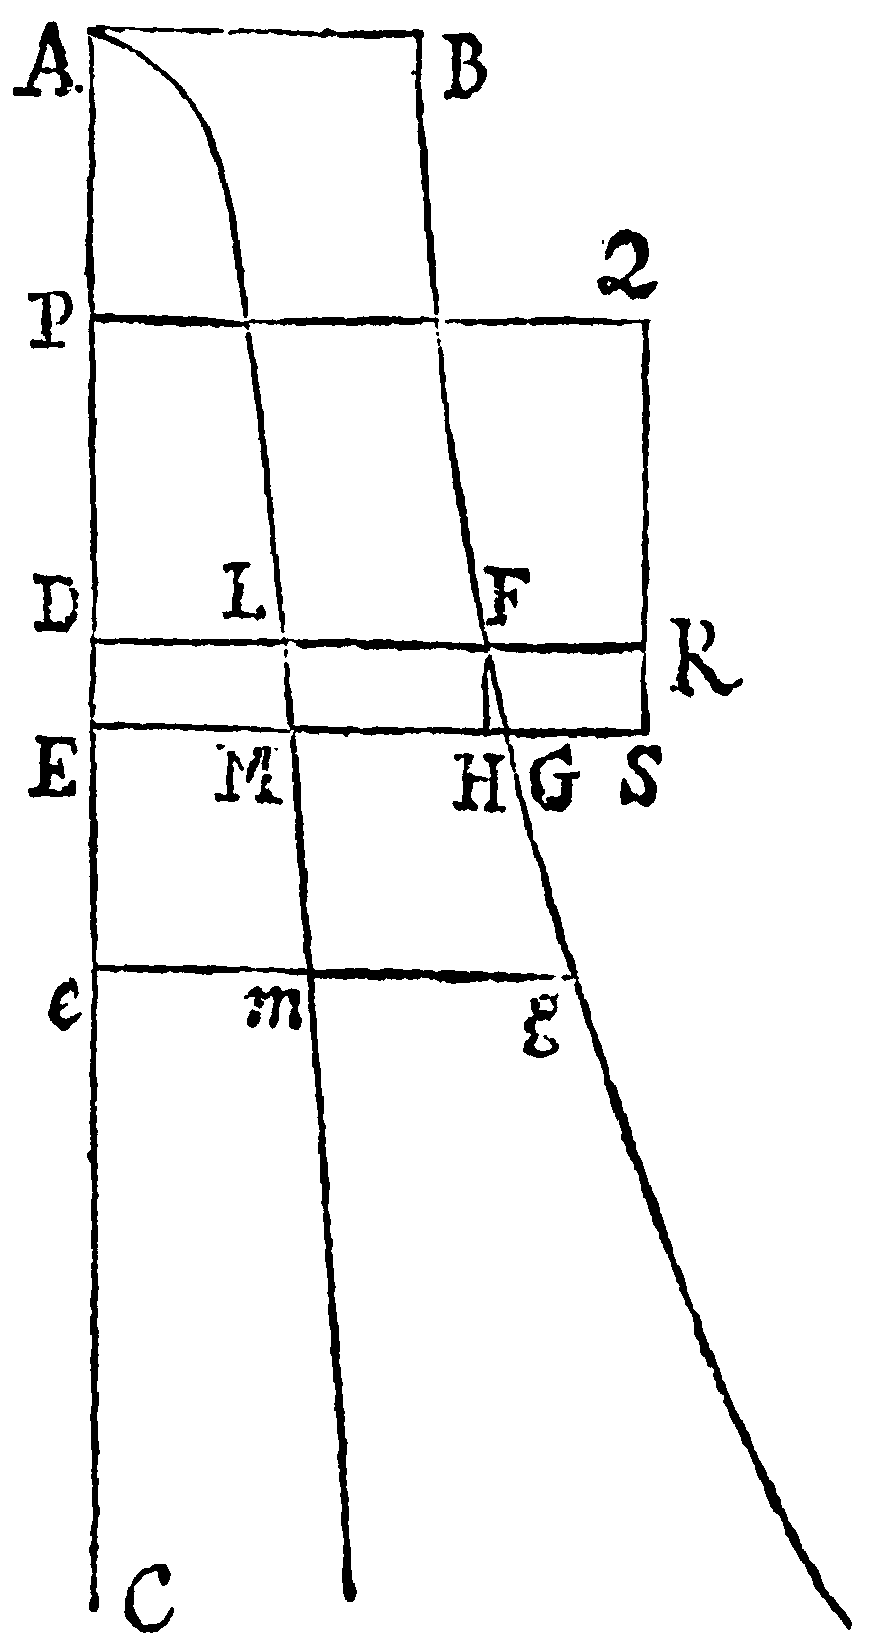 Figure for Prop. XXXIX.